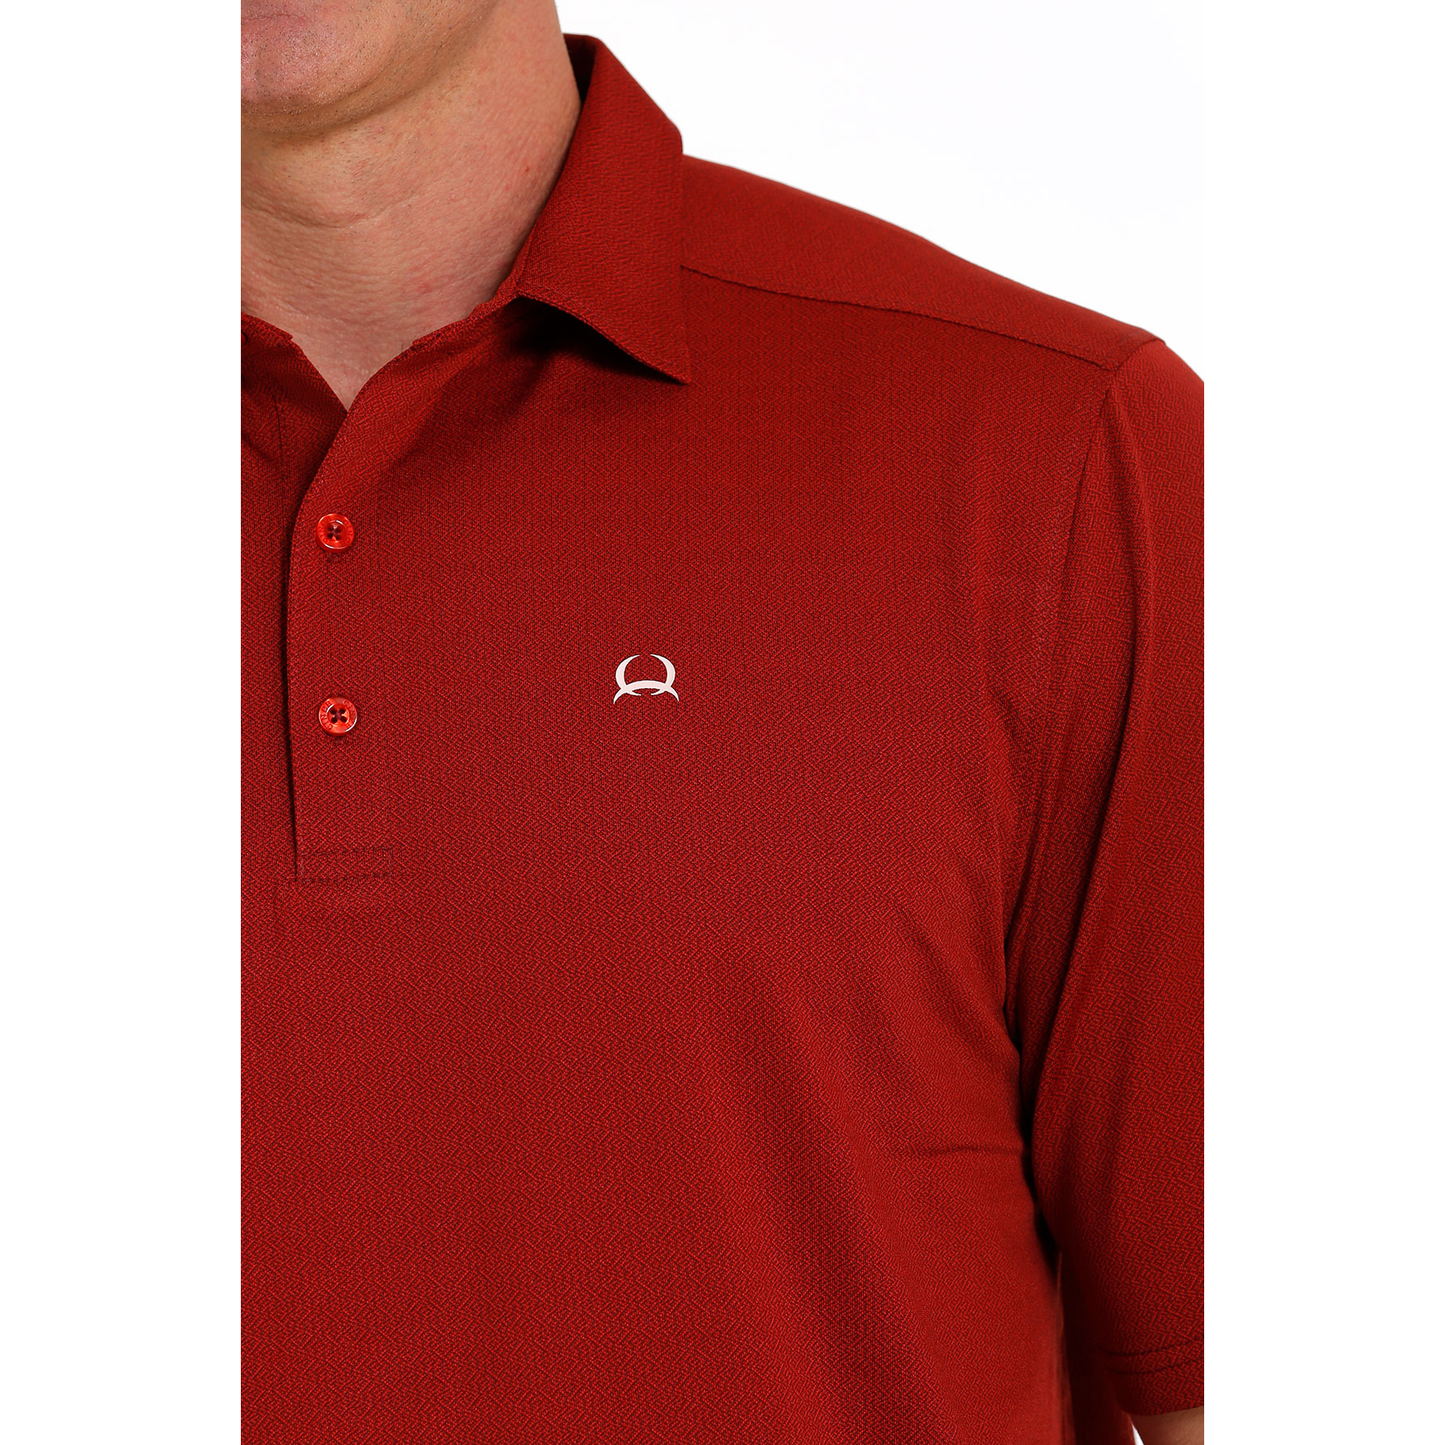 Cinch Men's Areanflex Red Polo Shirt MTK1863032